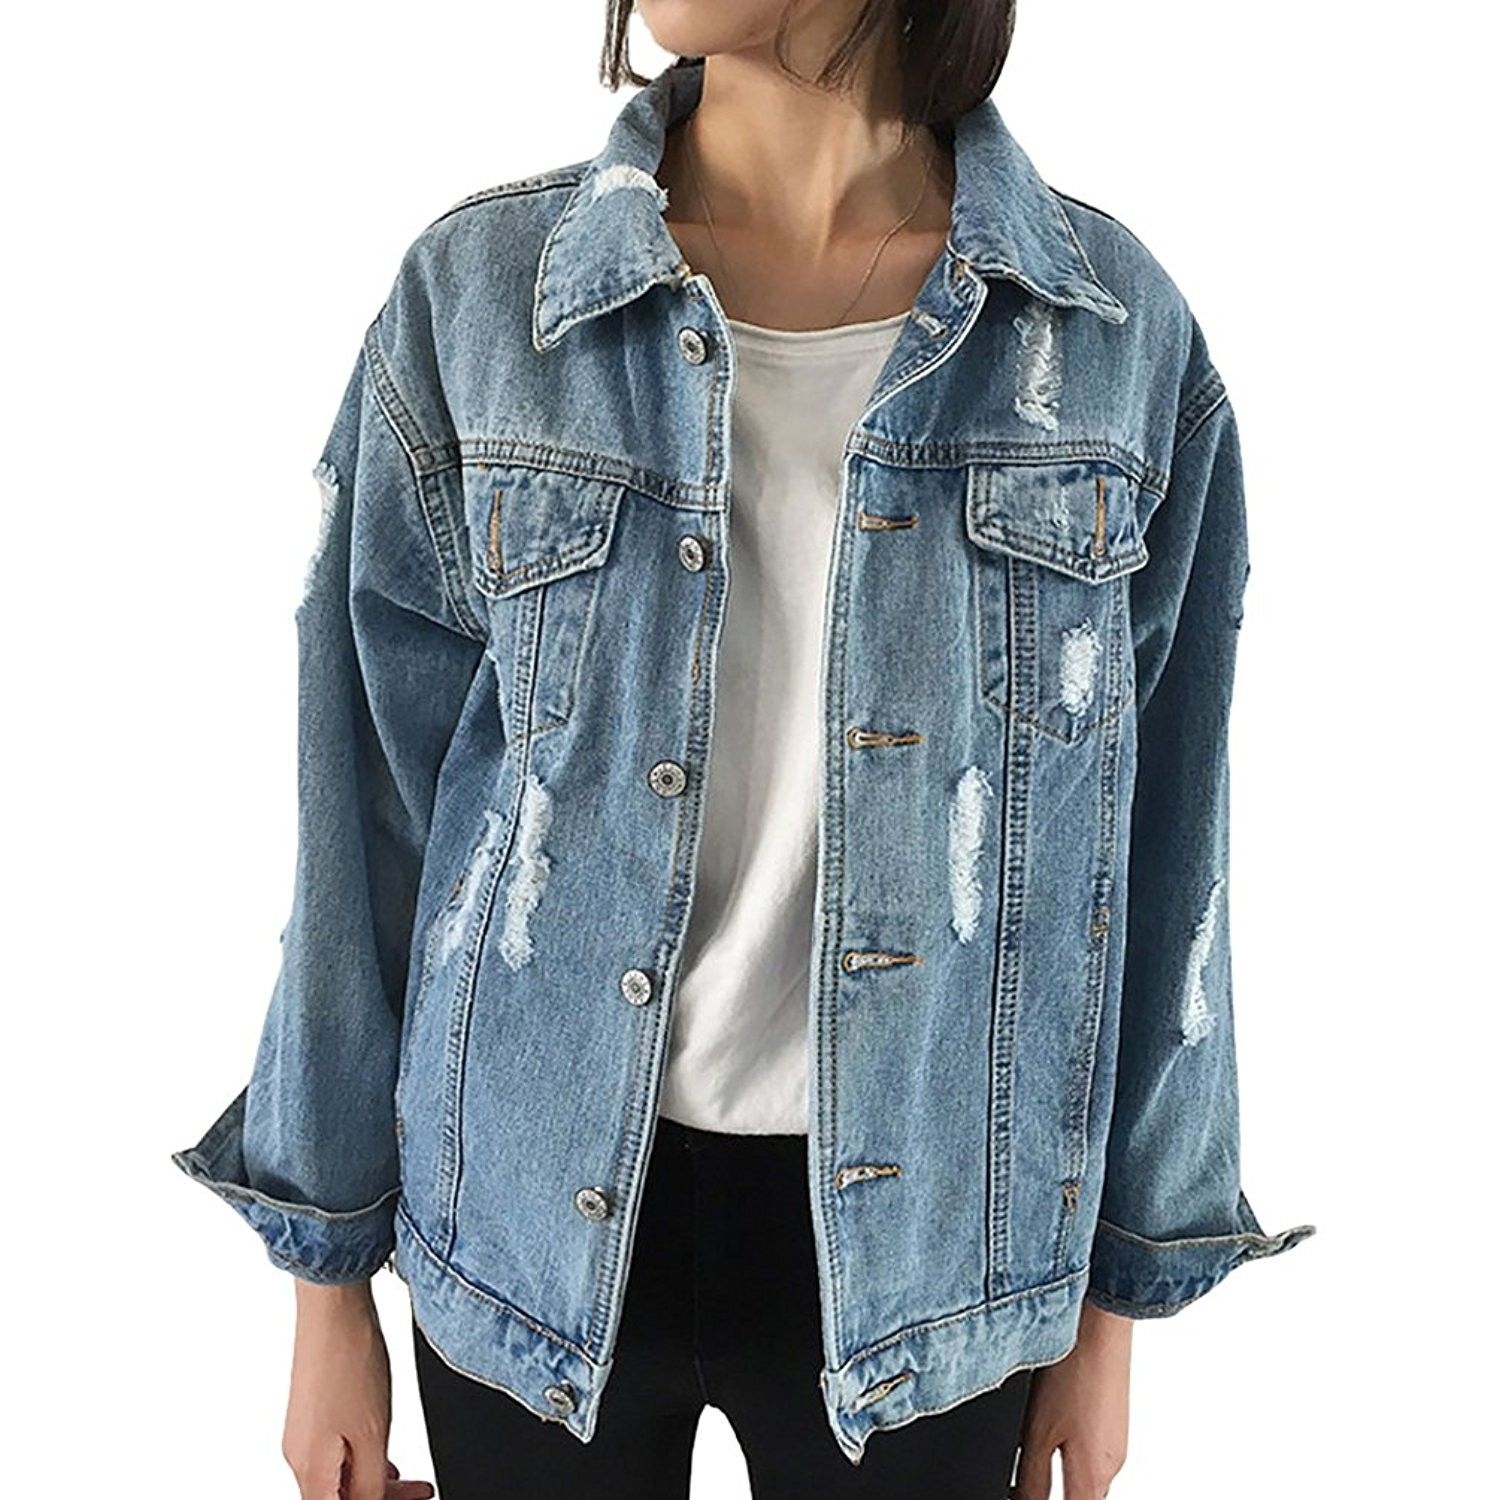 Denim Jacket refashion with brocade fabric — Sum of their Stories Craft Blog